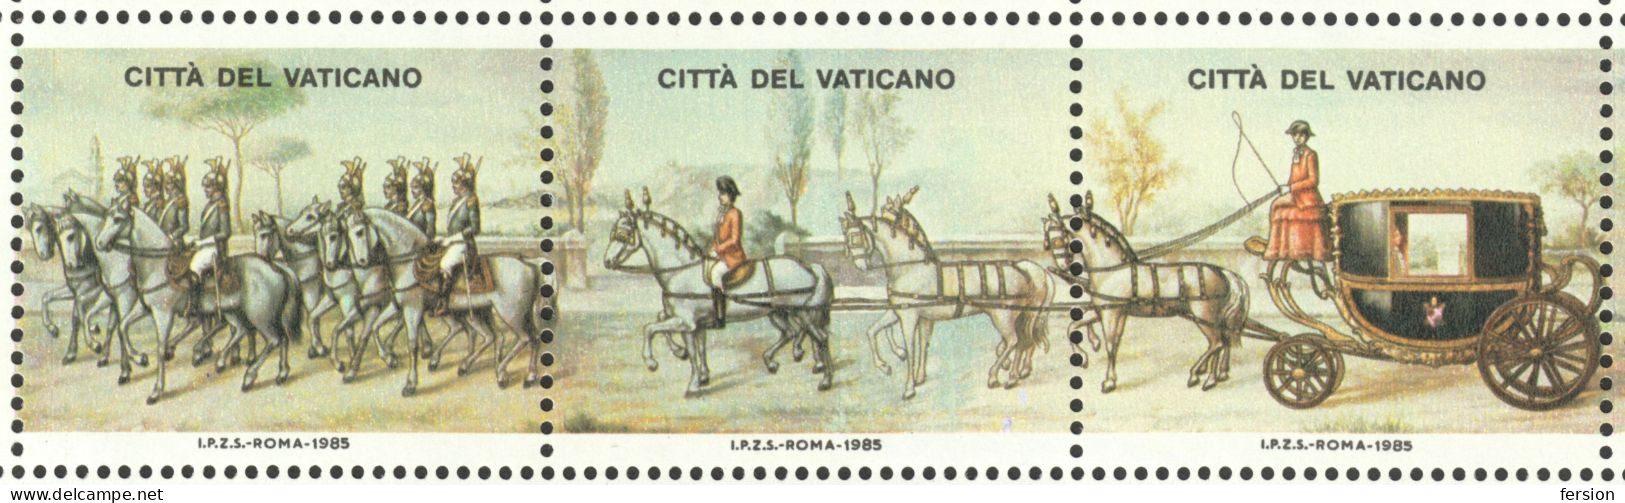 ITALY 1985 philatelic exhibition LABEL CINDERELLA VIGNETTE memorial sheet - VATICAN - guard pope military horse coach